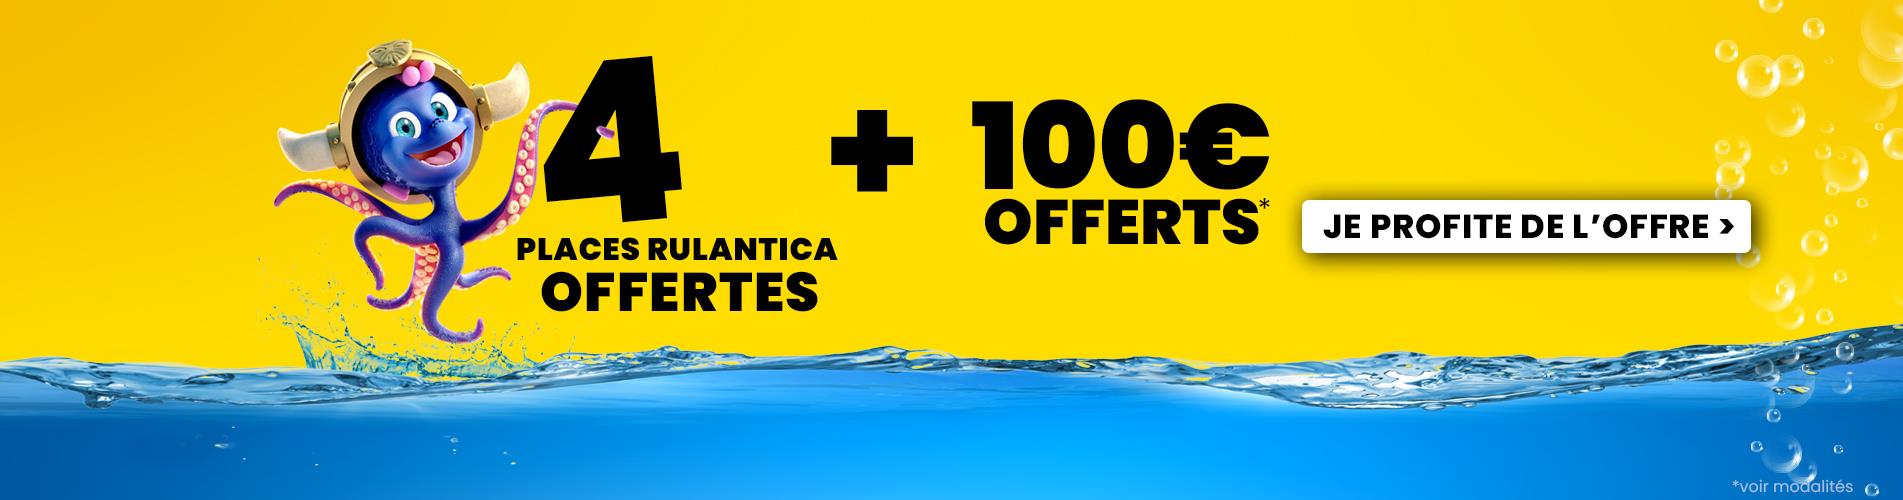 [2] Offre Rulantica + 100€